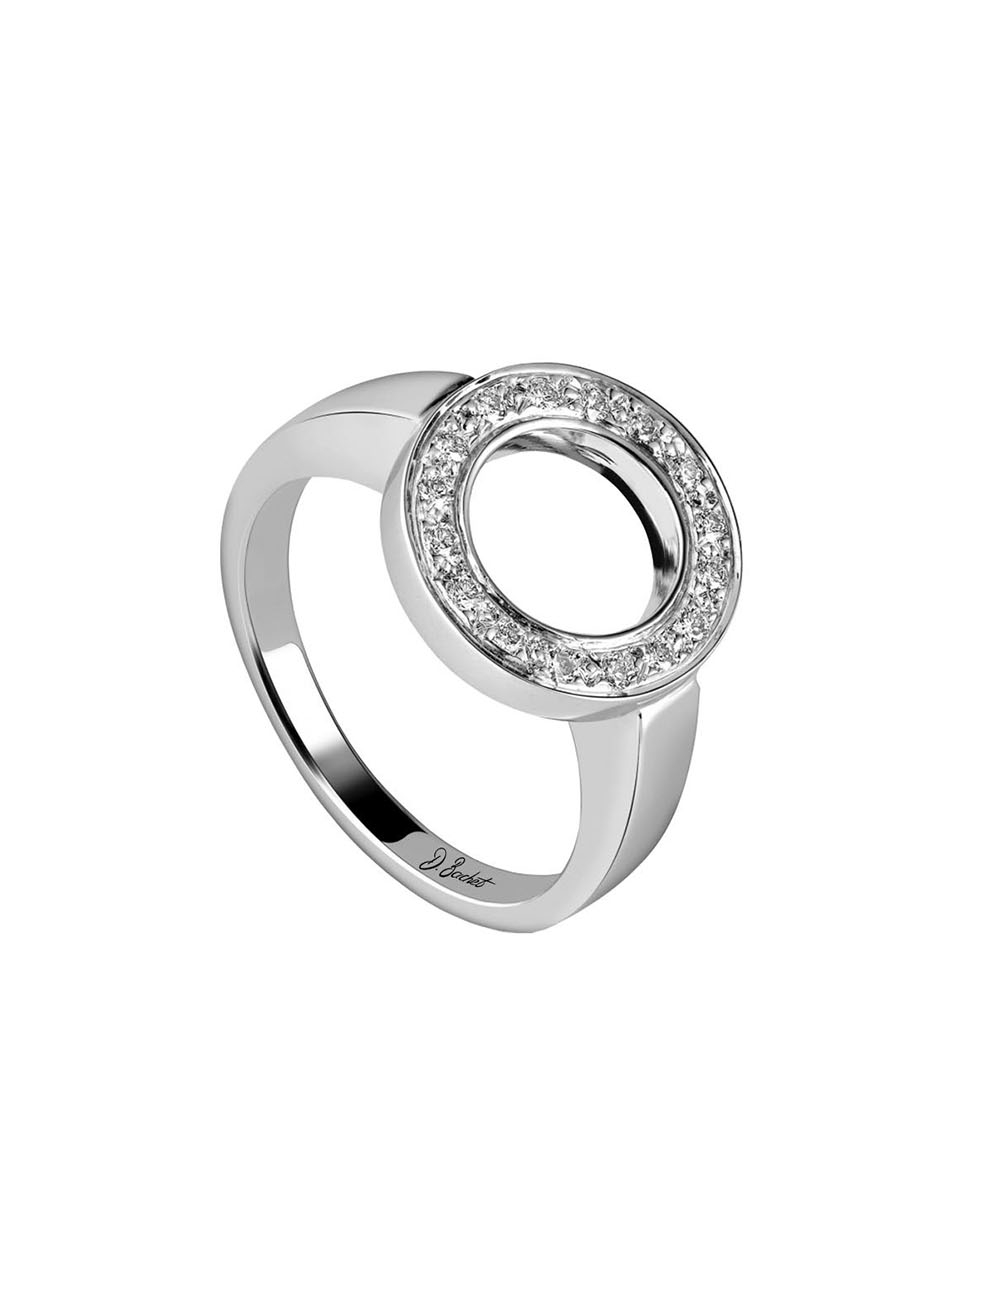 Women's ring in platinum and white diamonds, the perfect luxury jewelry gift